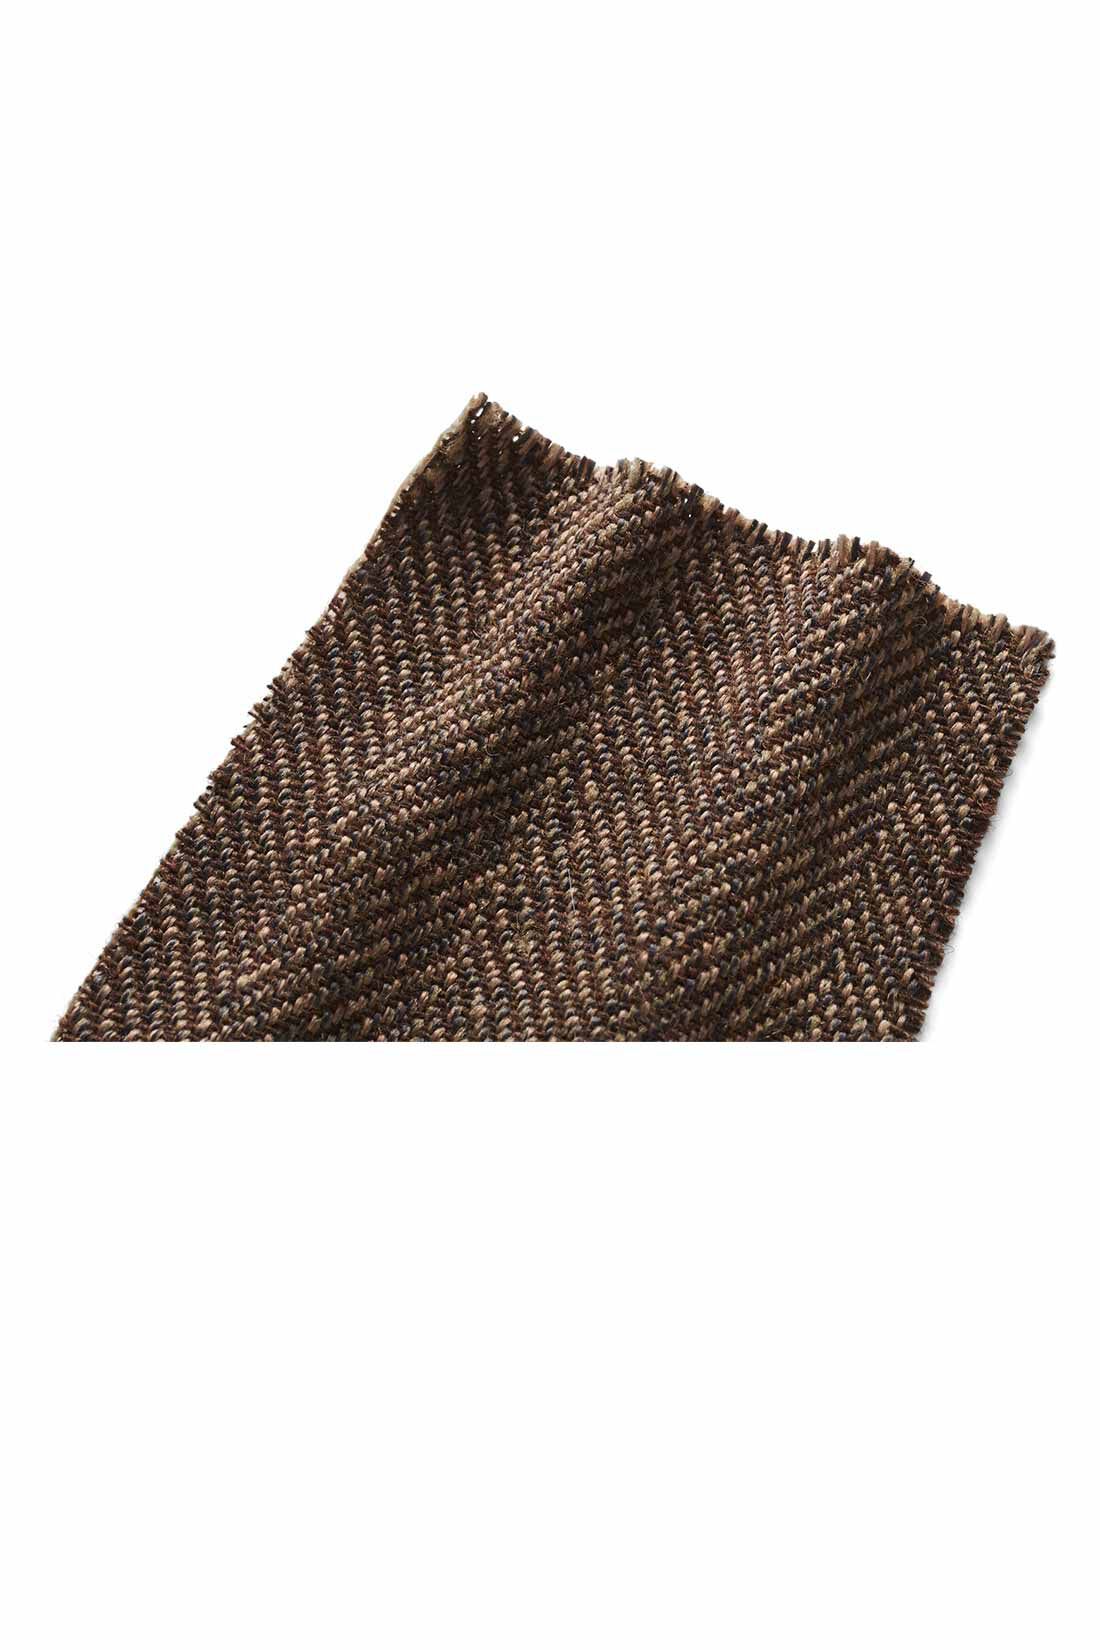 MEDE19F|MEDE19F ツイードヘリンボーンのリラックスベルテッドパンツ〈ブラウン〉|やや張りのあるウール混のミックスツイードヘリンボーン。クラシックで上品な織り柄です。